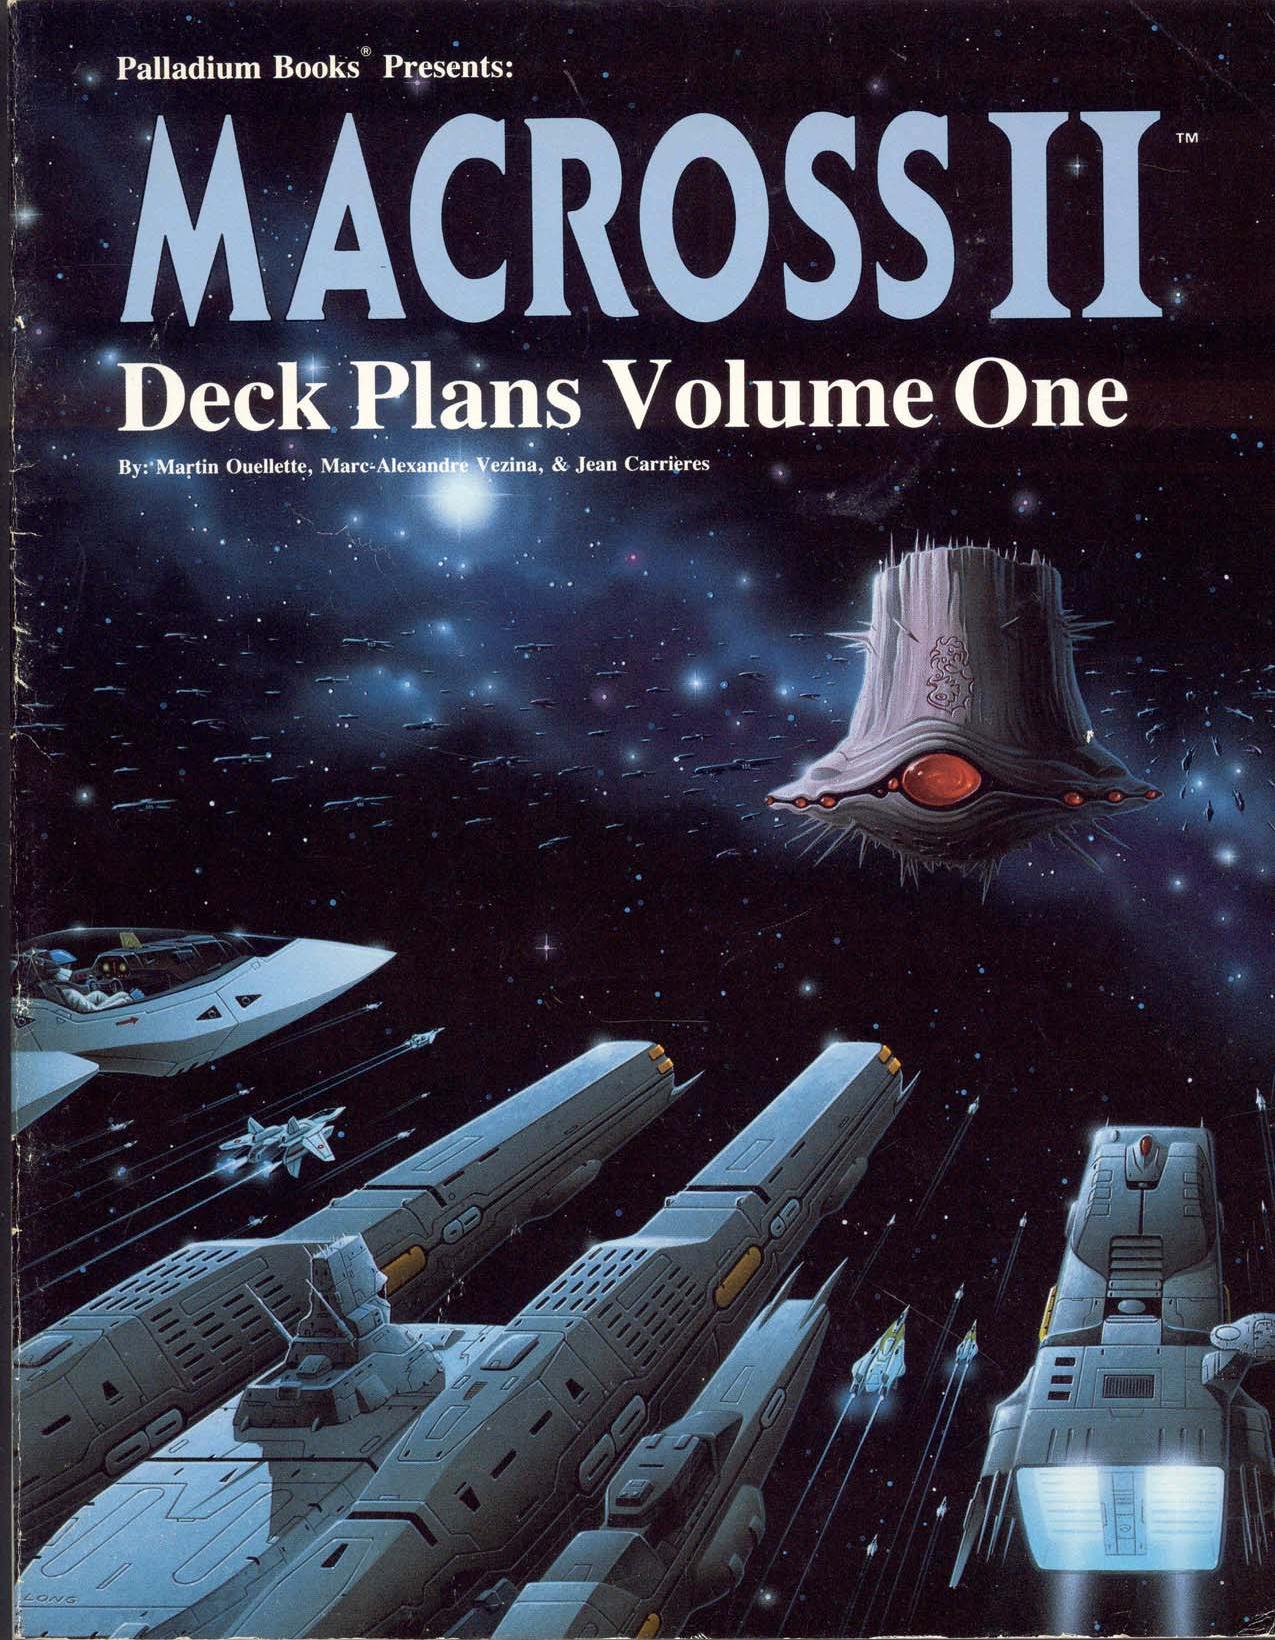 Deck Plans Volume 01